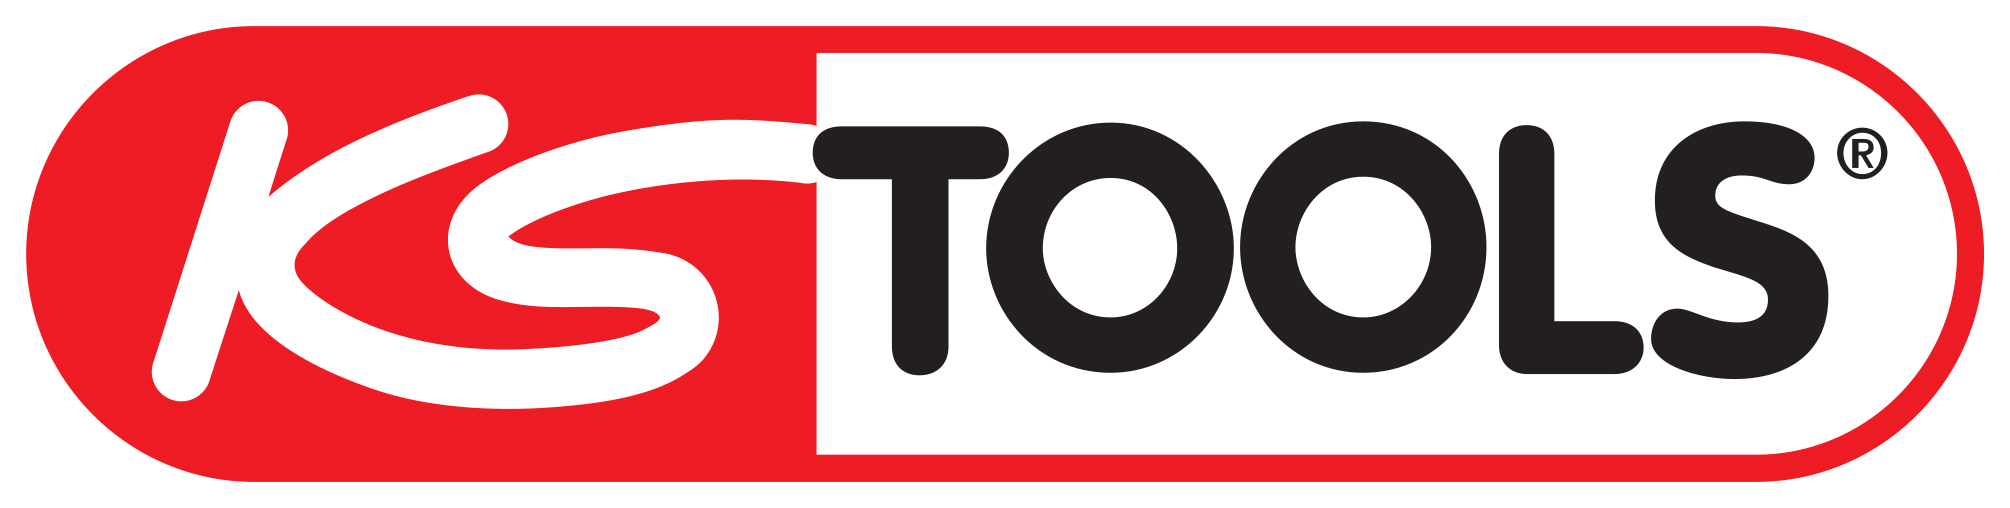 GARAGE ROBERT  - logo KS Tools